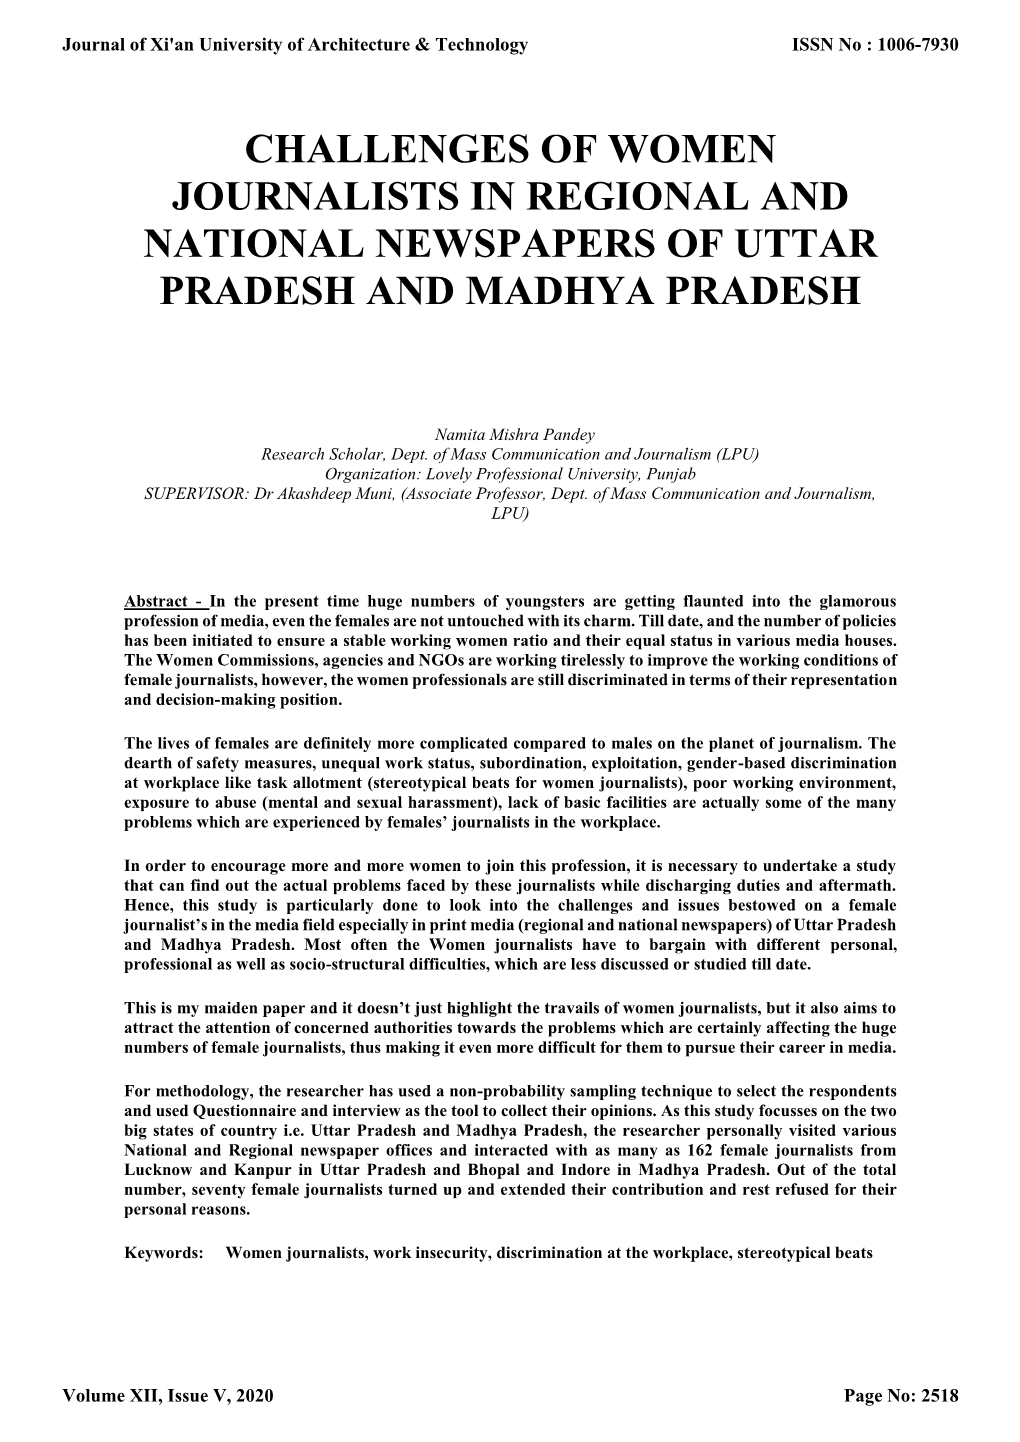 Challenges of Women Journalists in Regional and National Newspapers of Uttar Pradesh and Madhya Pradesh